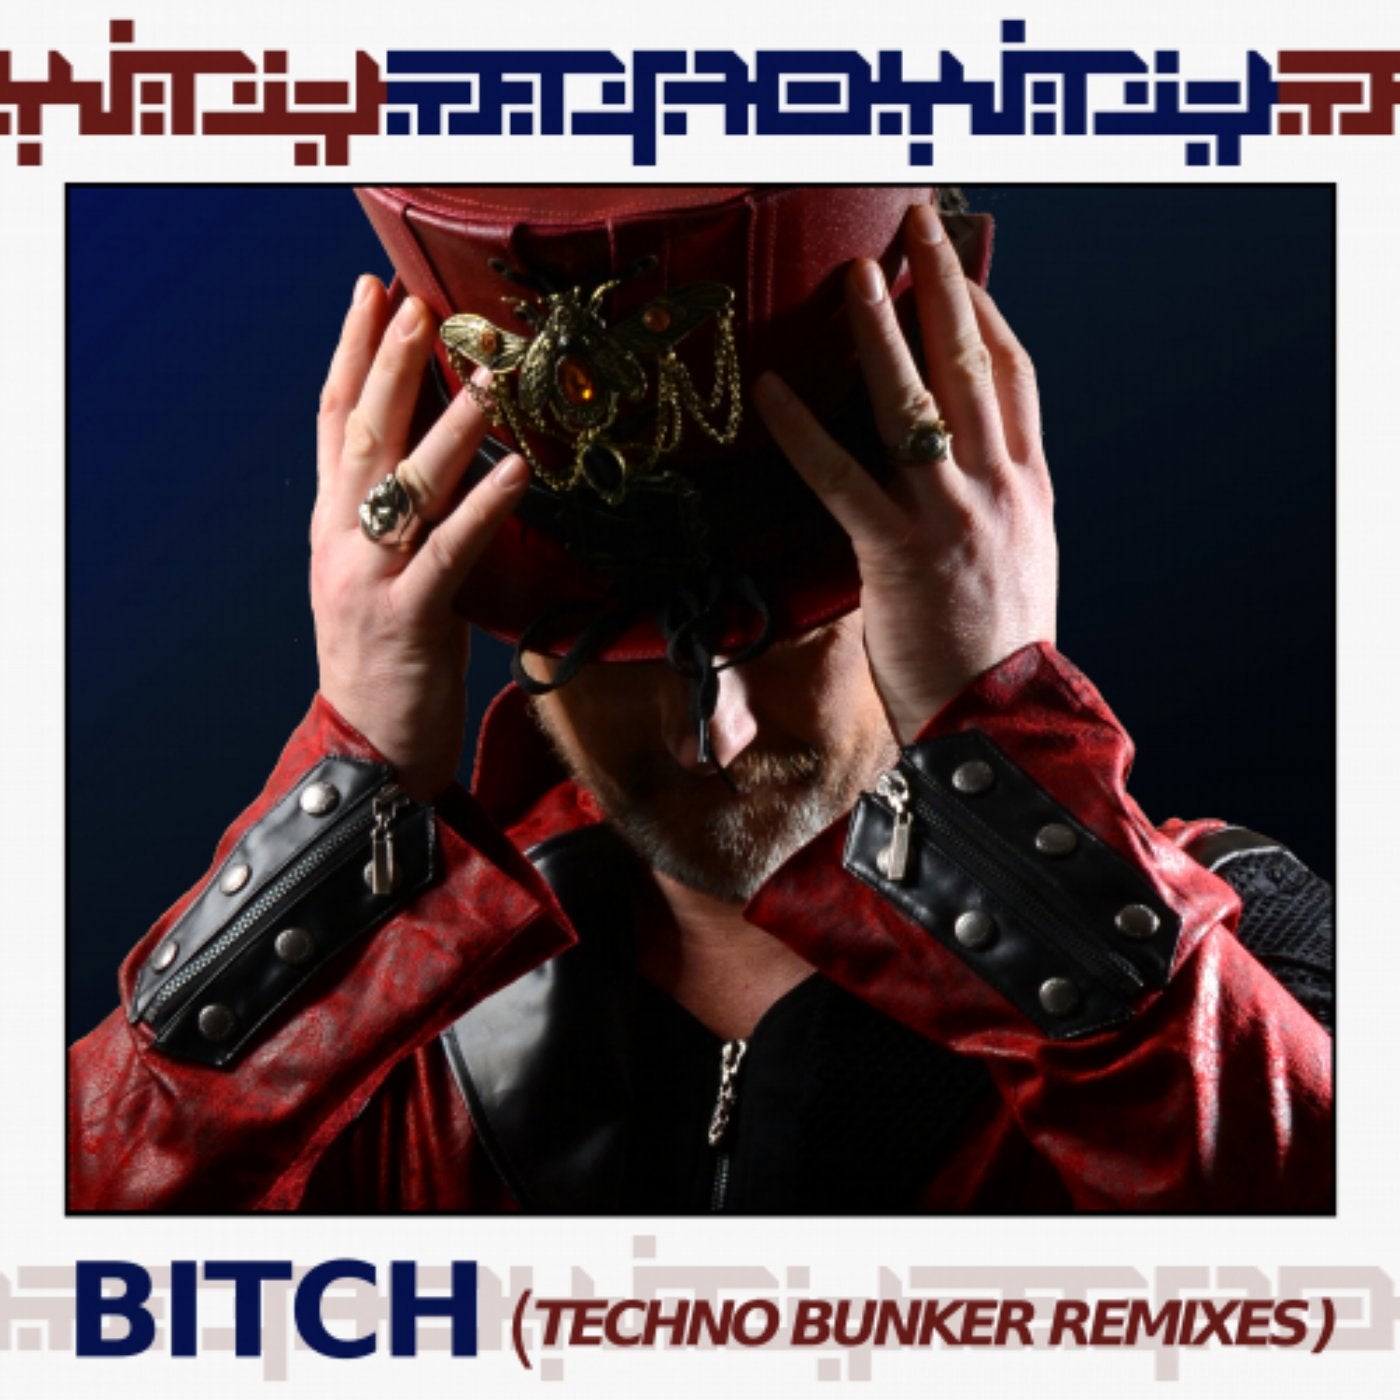 Bitch (Techno Bunker Remixes)